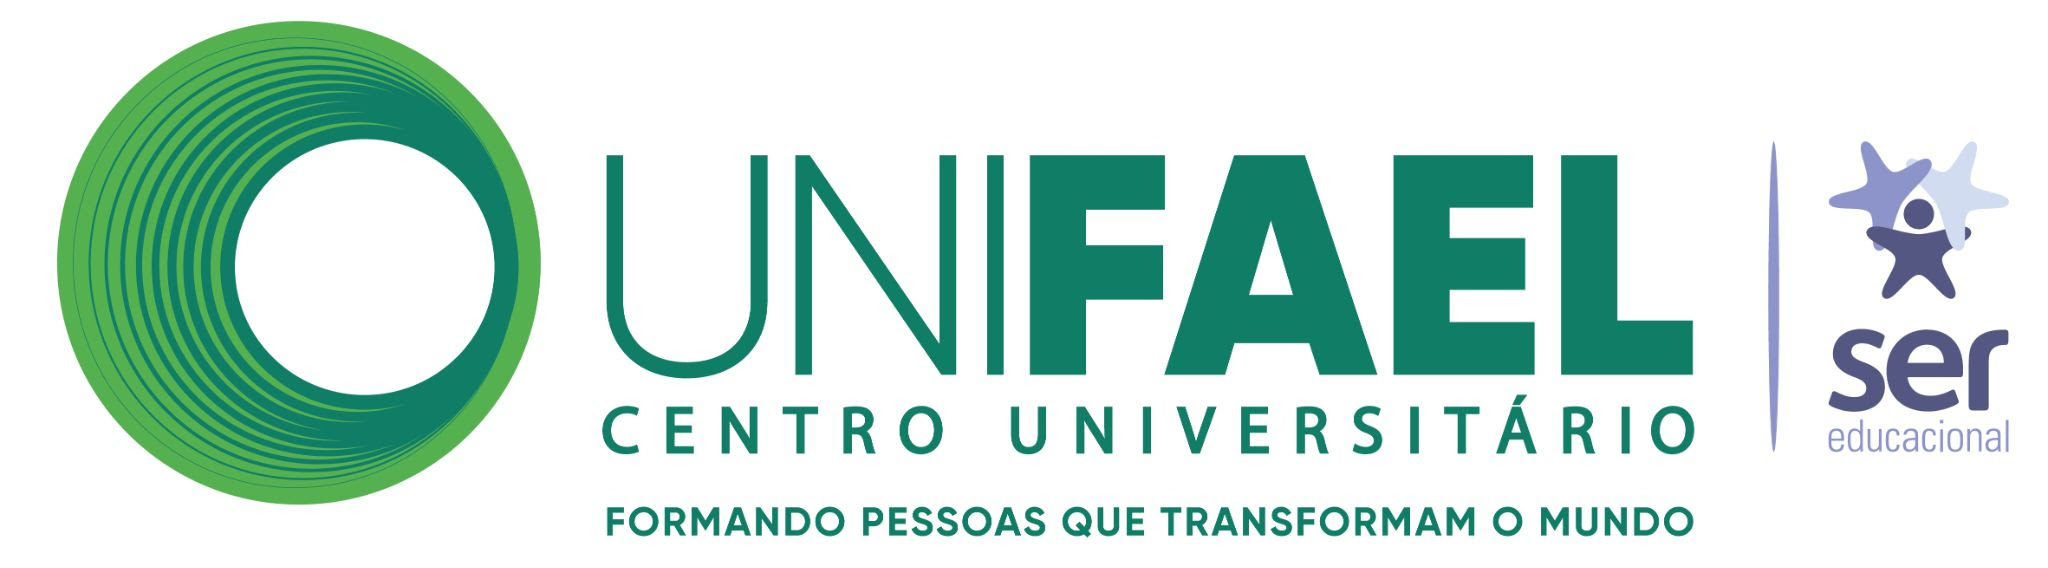 Logo Unifael_Ser Educacional